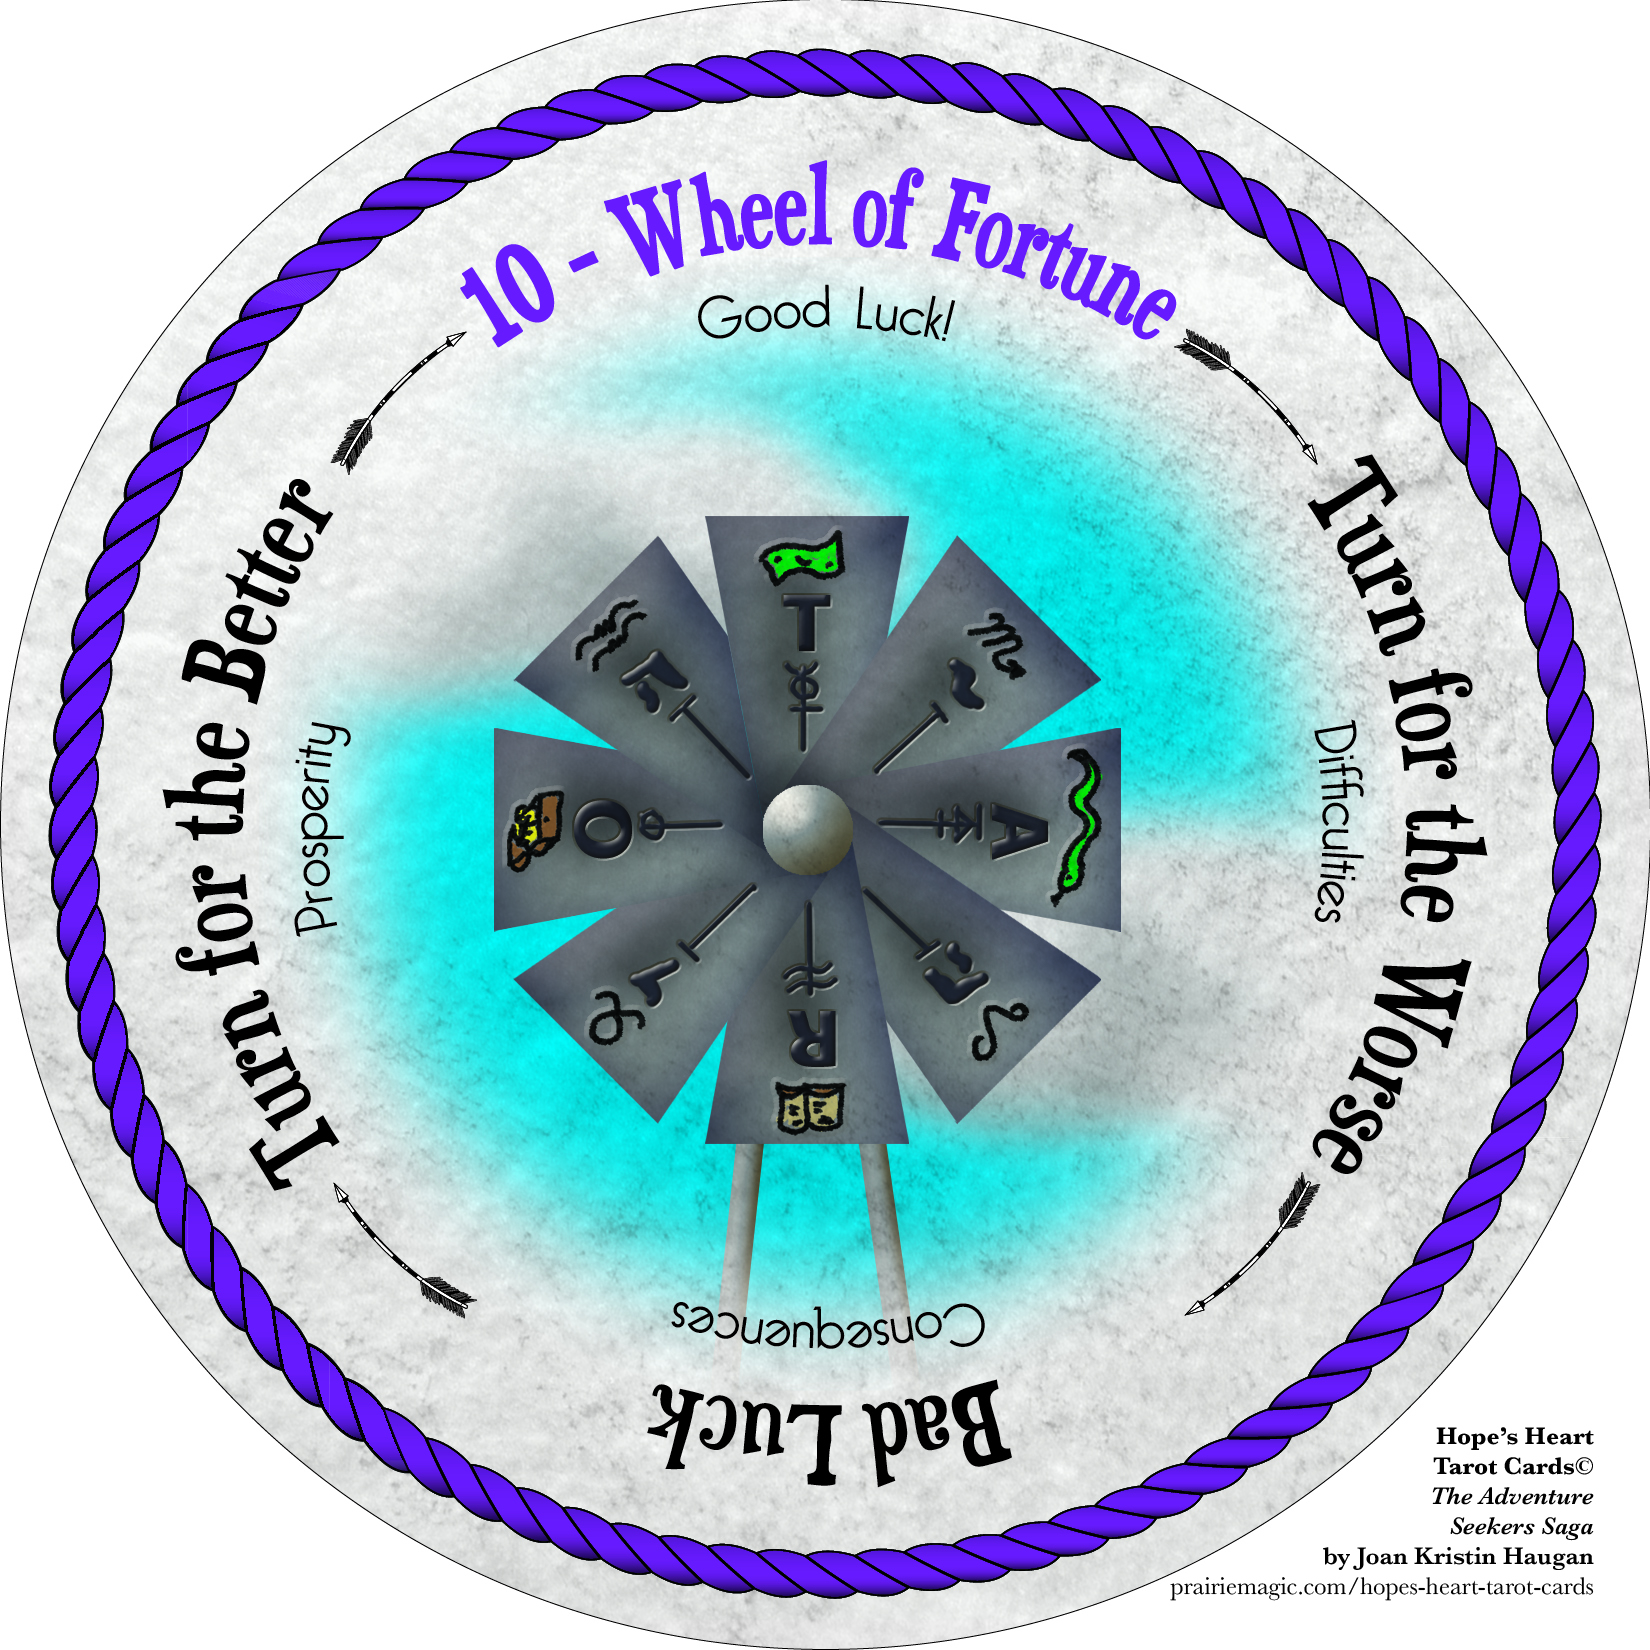 10 Wheel of Fortune - Hope's Heart Tarot™